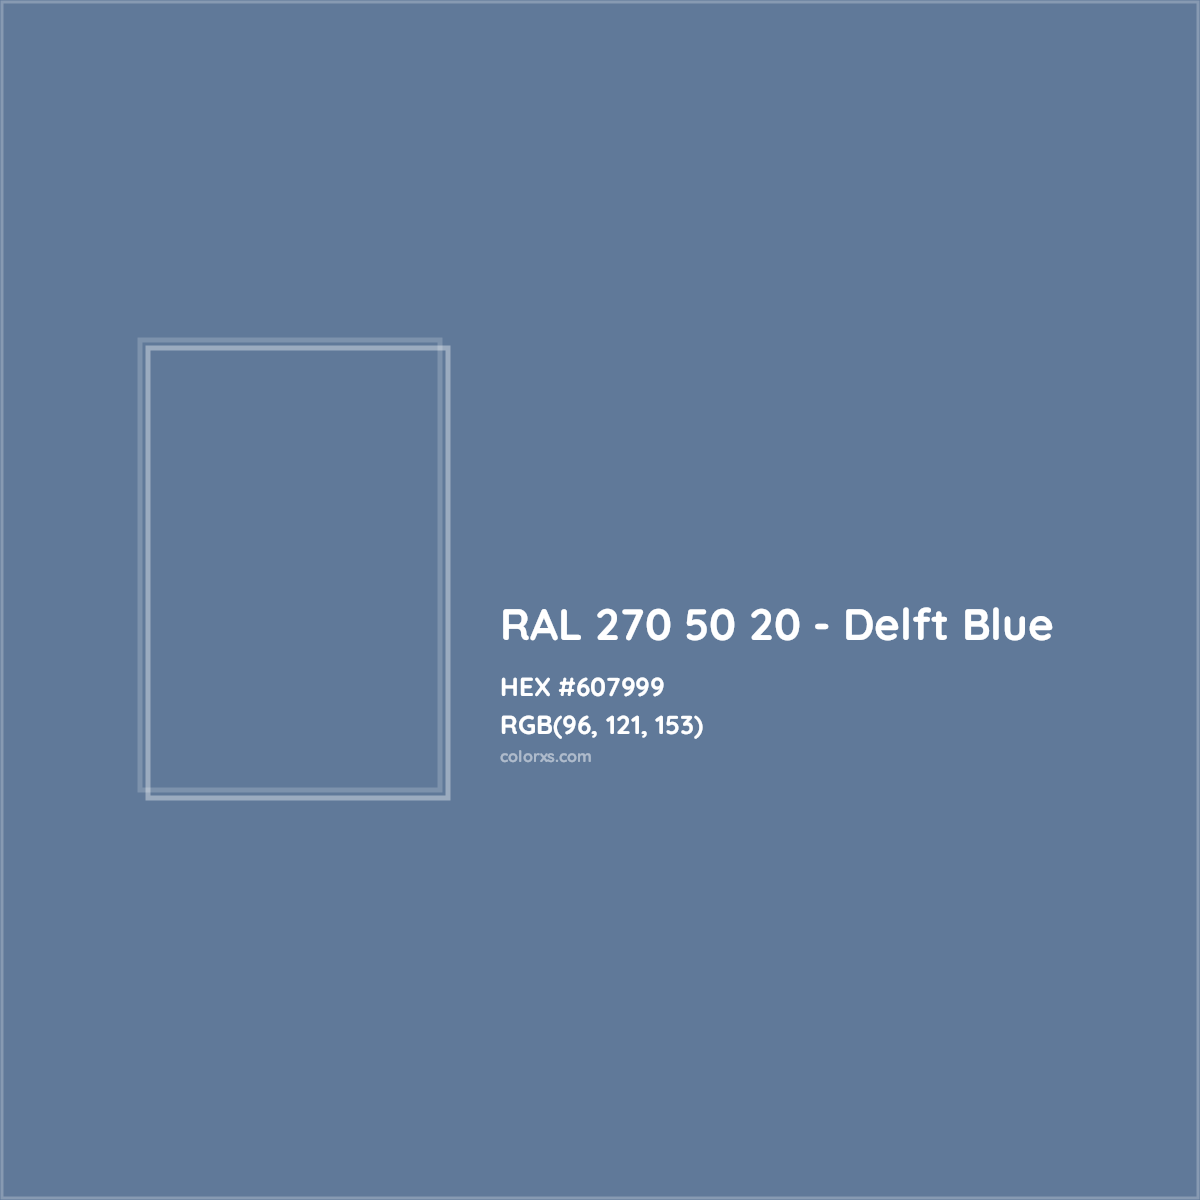 HEX #607999 RAL 270 50 20 - Delft Blue CMS RAL Design - Color Code